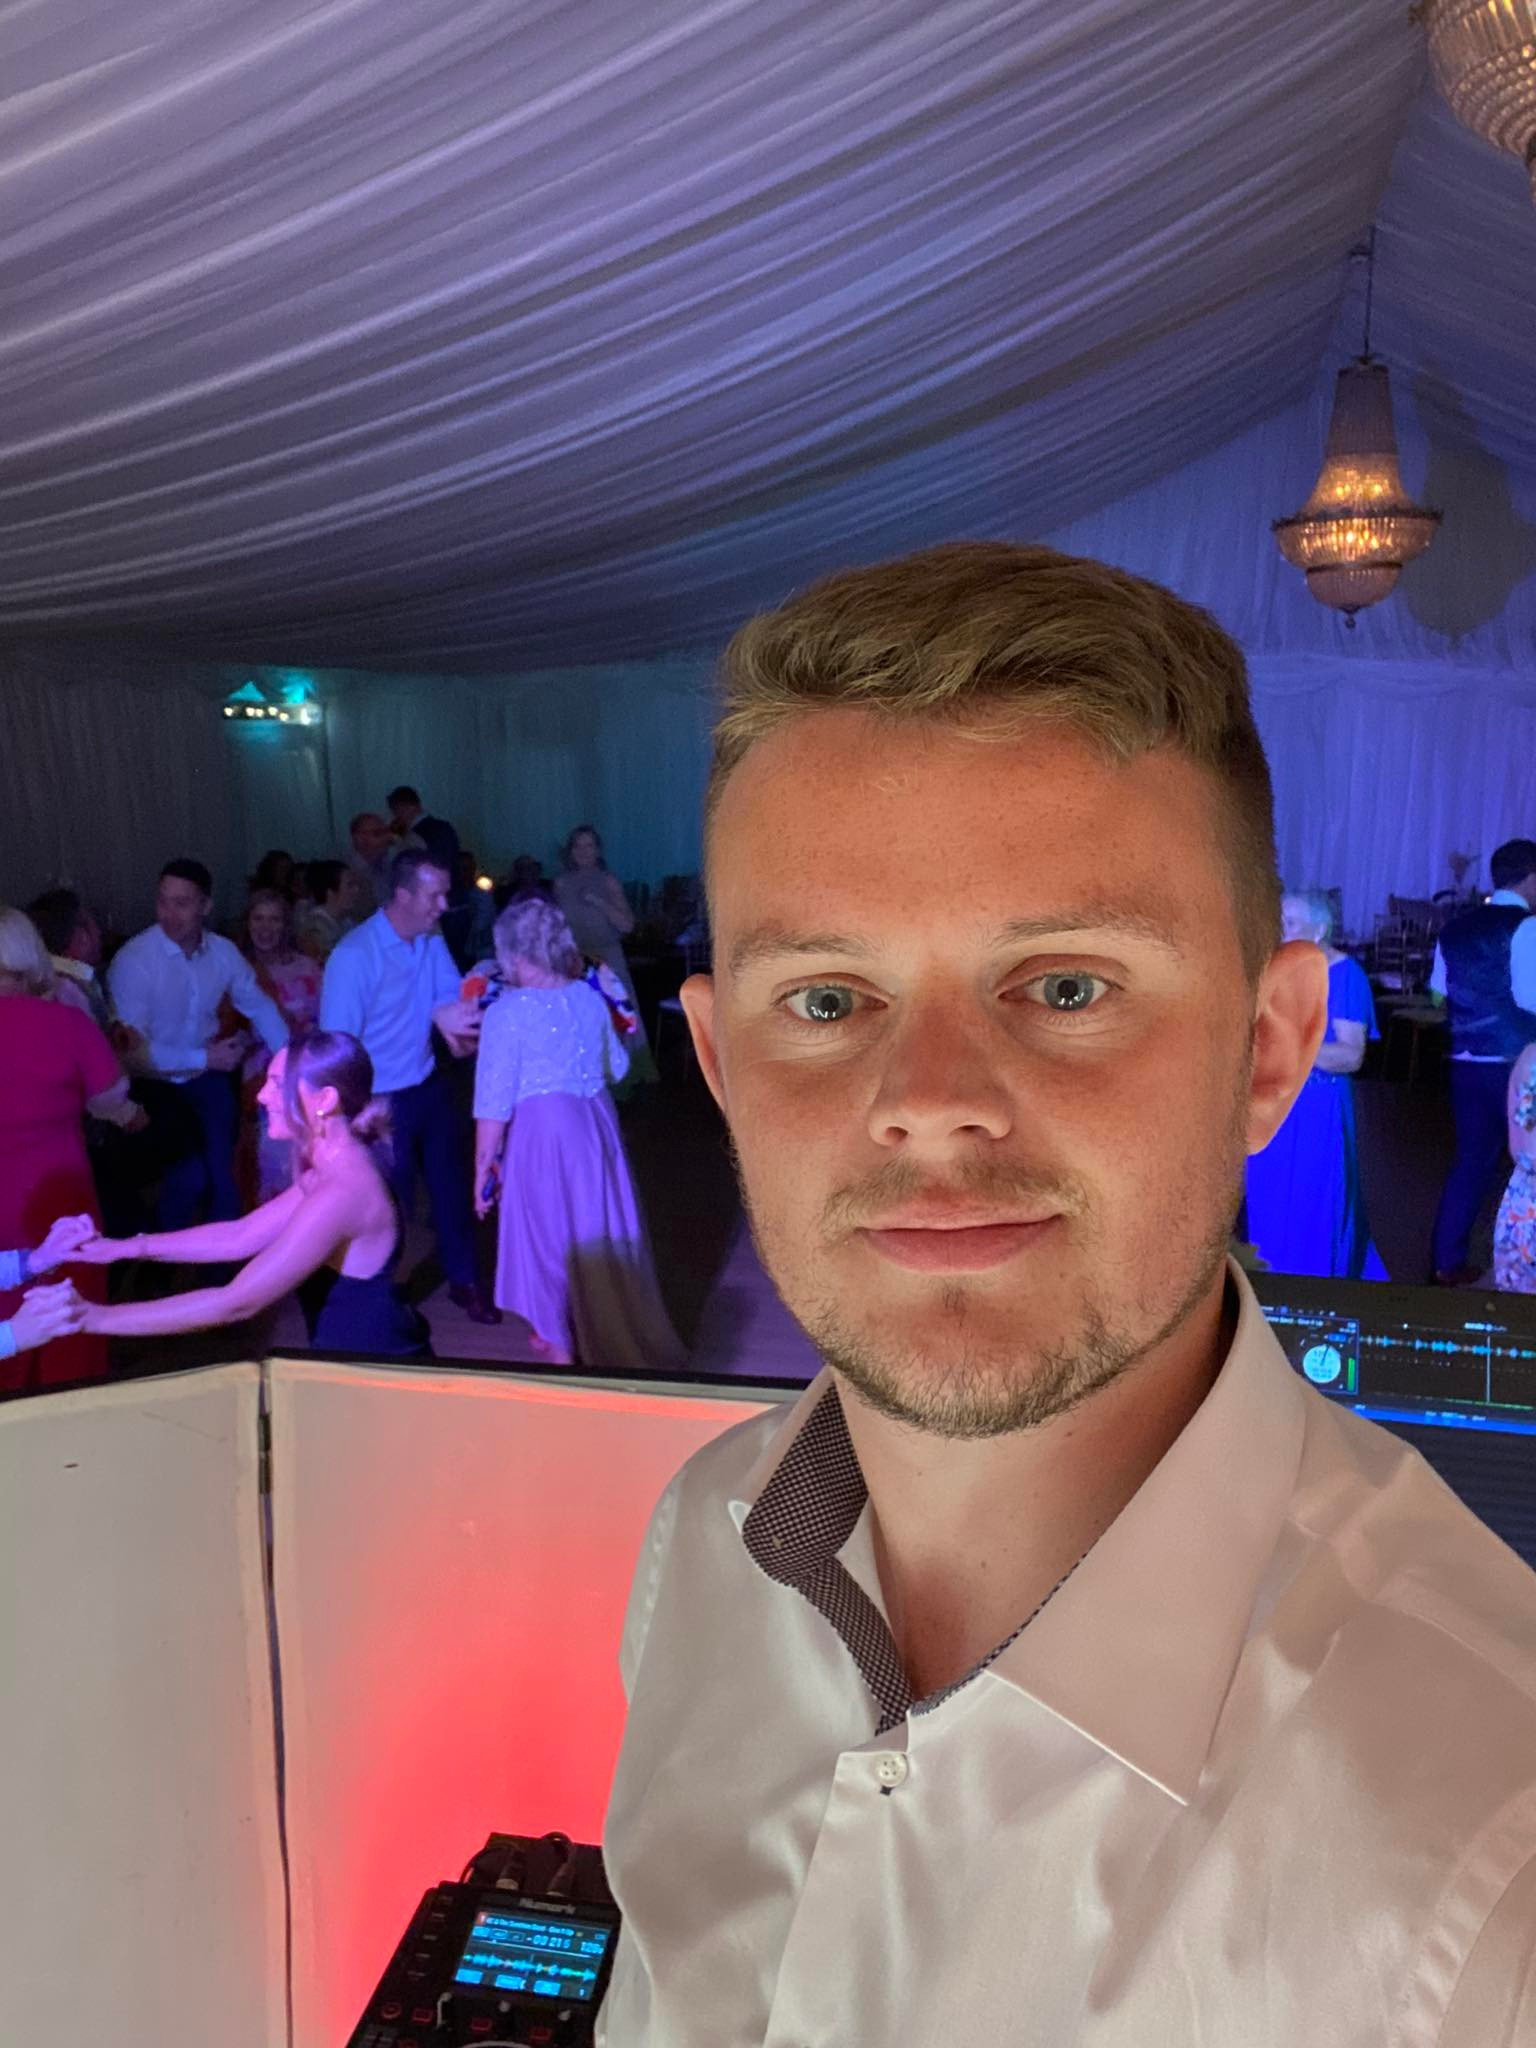 The Bryan Mc Donnell Wedding DJ Experience